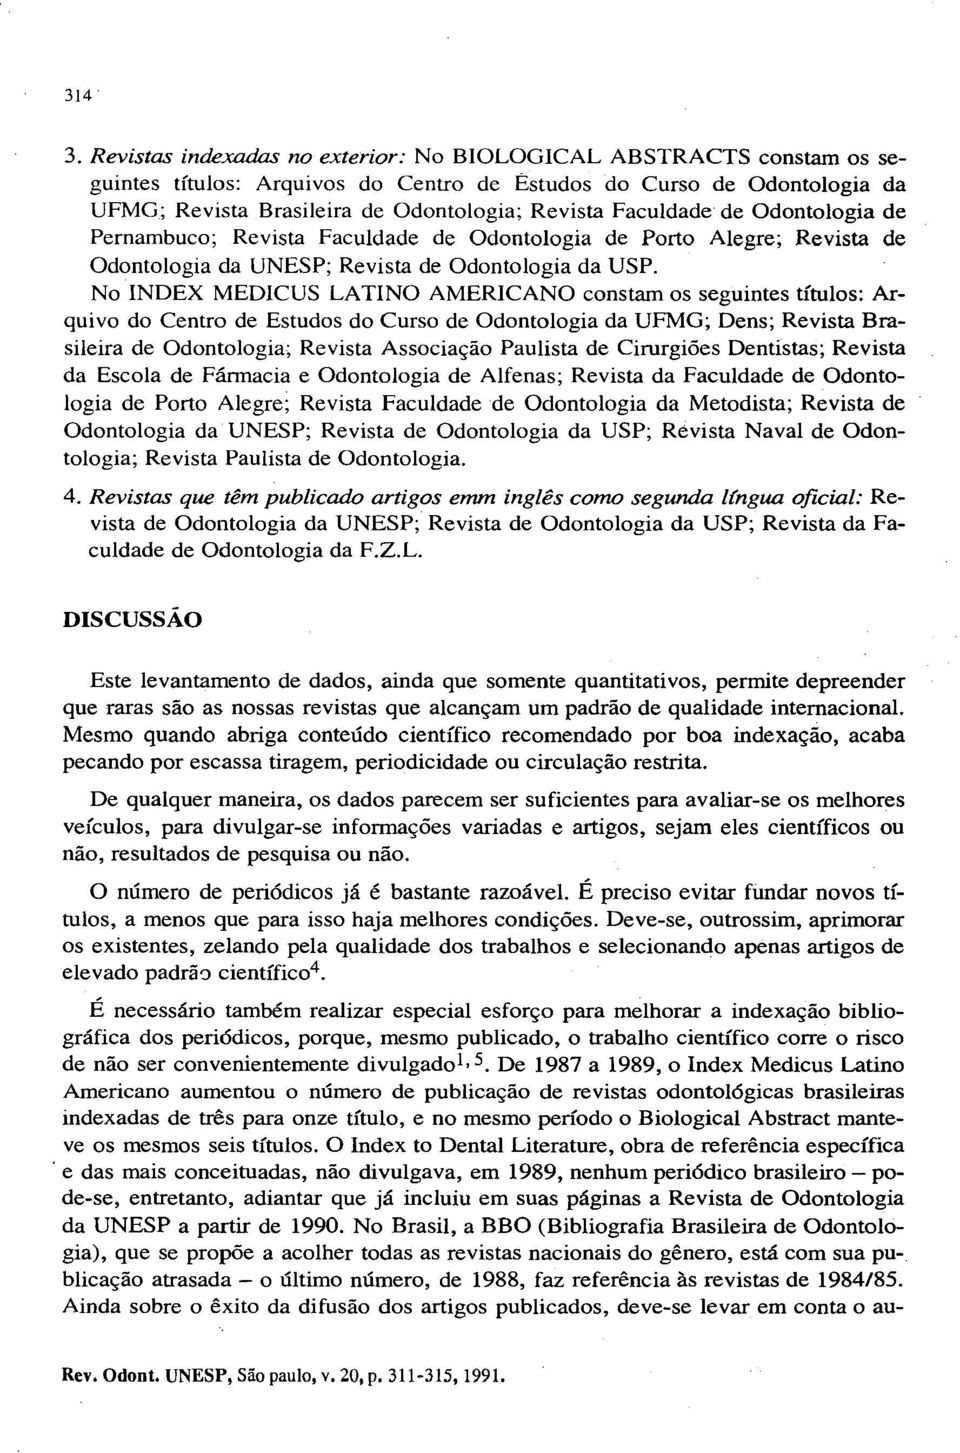 Faculdade de Odontologia de Pernambuco; Revista Faculdade de Odontologia de Porto Alegre; Revista de Odontologia da UNESP; Revista de Odontologia da USP.